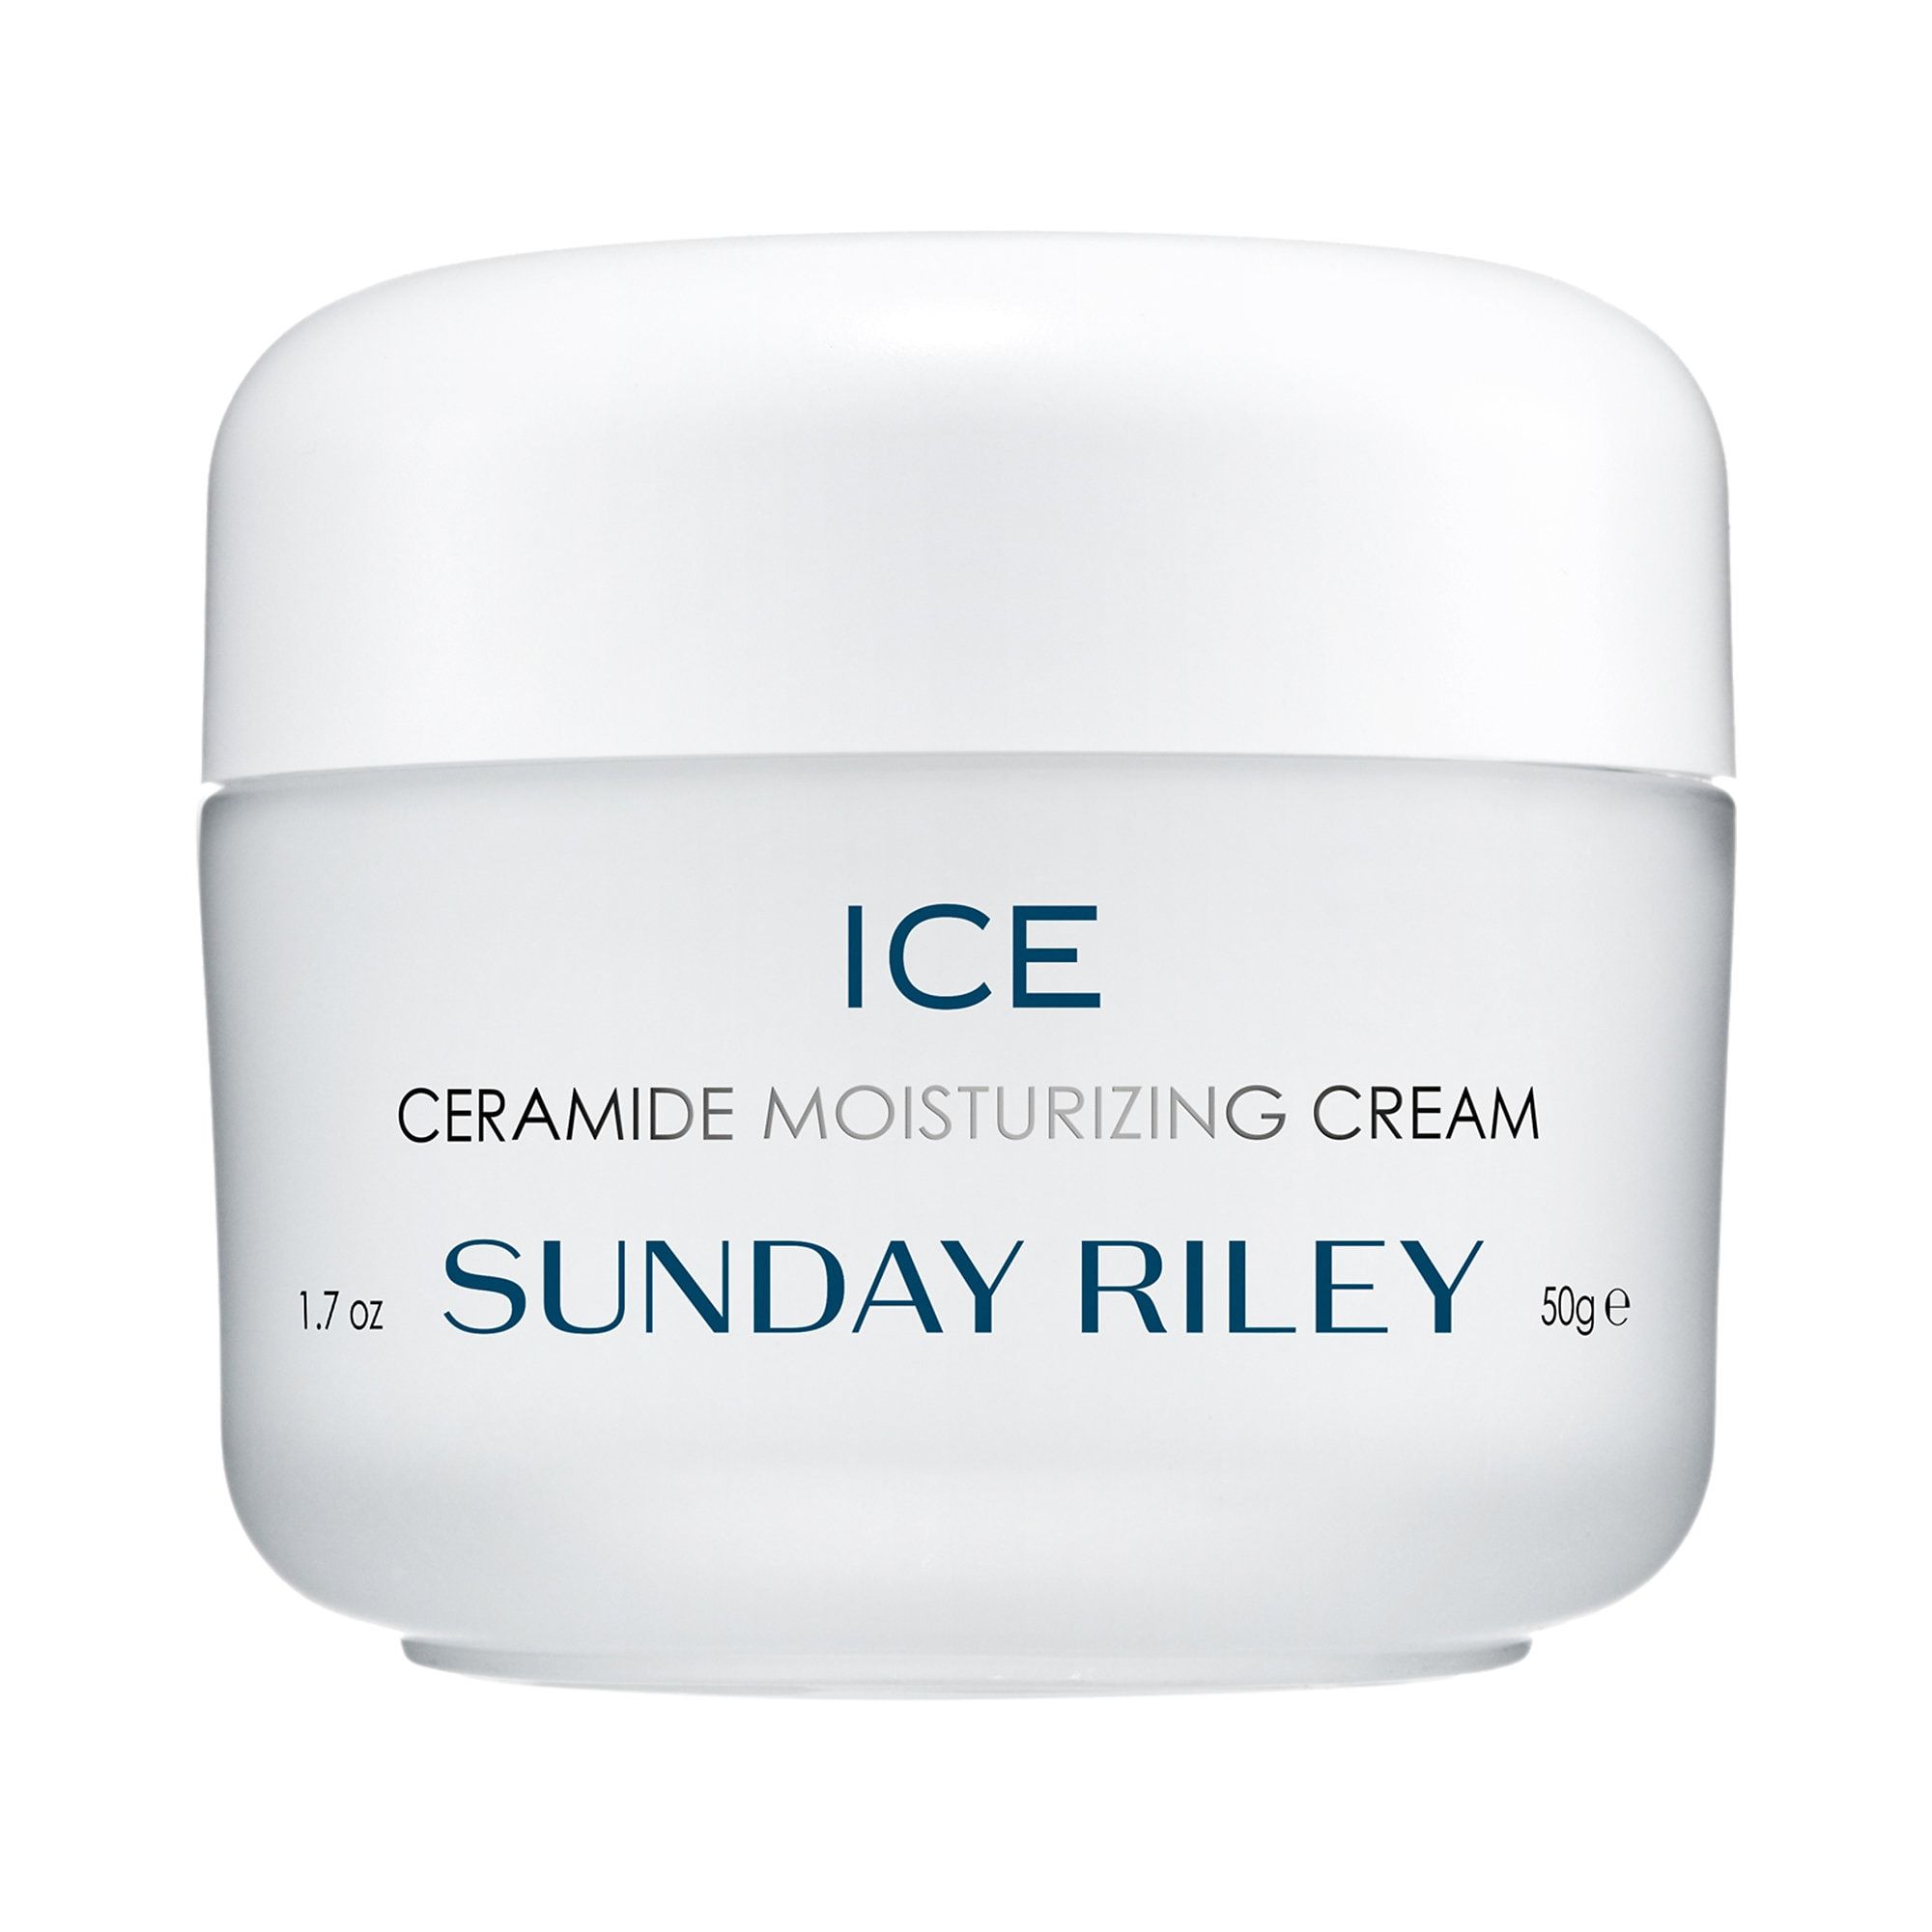 SUNDAY RILEY ICE Ceramide Moisturizing Cream 